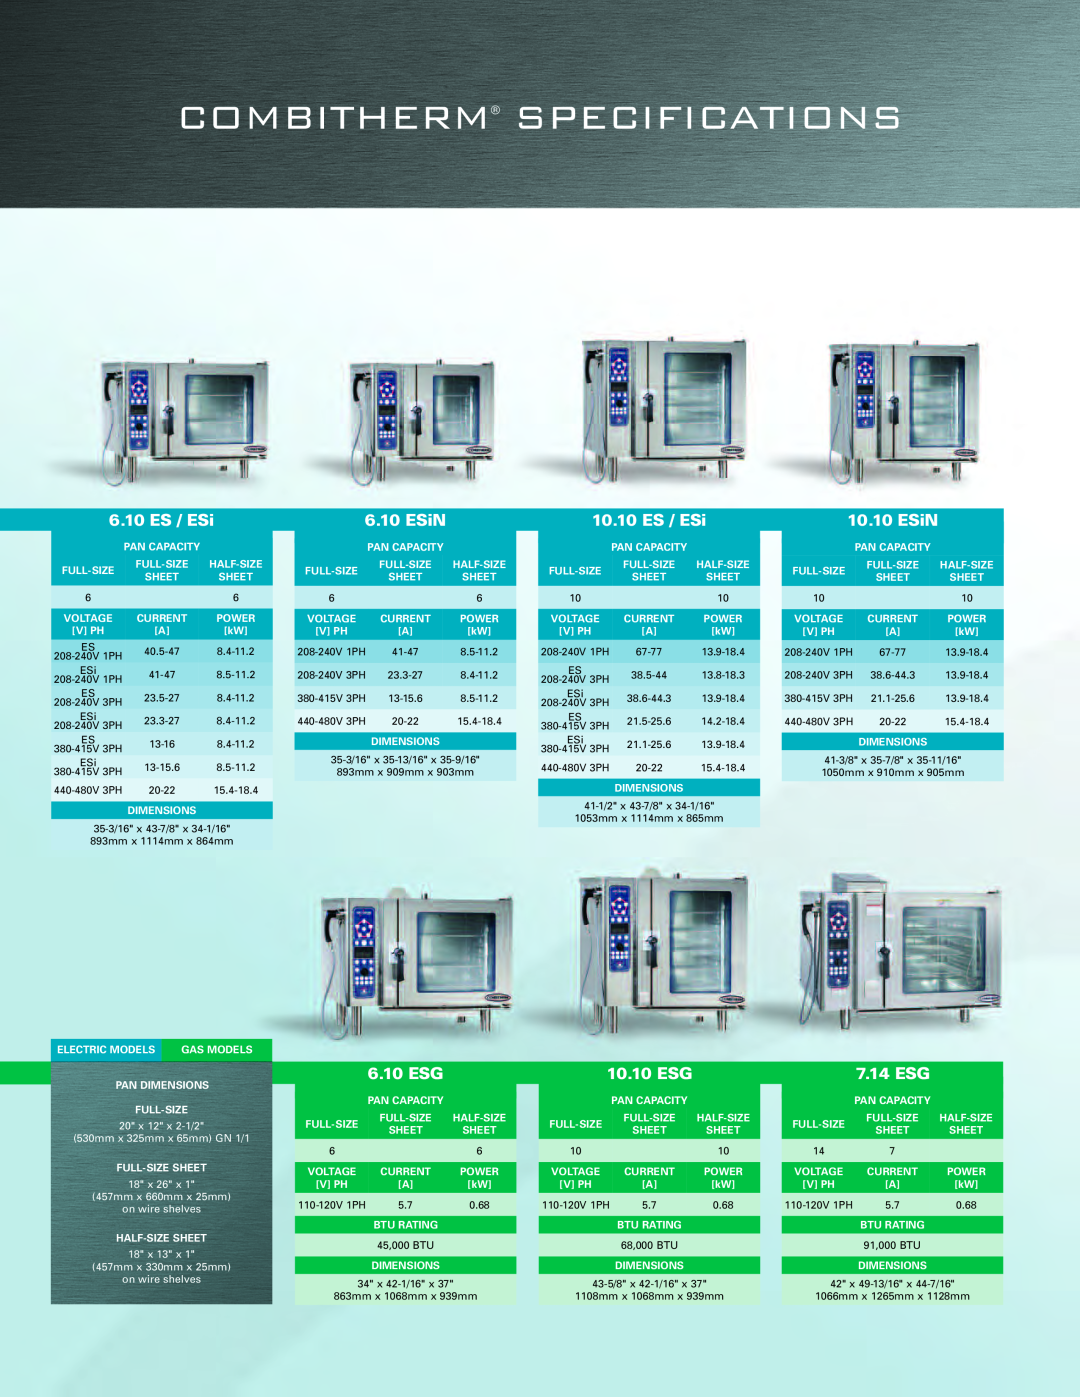 Alto-Shaam Combi Oven Combitherm Specifications, 6.10 ES / ESi, ESiN, 10.10 ES / ESi, 6.10 ESG, 10.10 ESG, 7.14 ESG, 18 x 